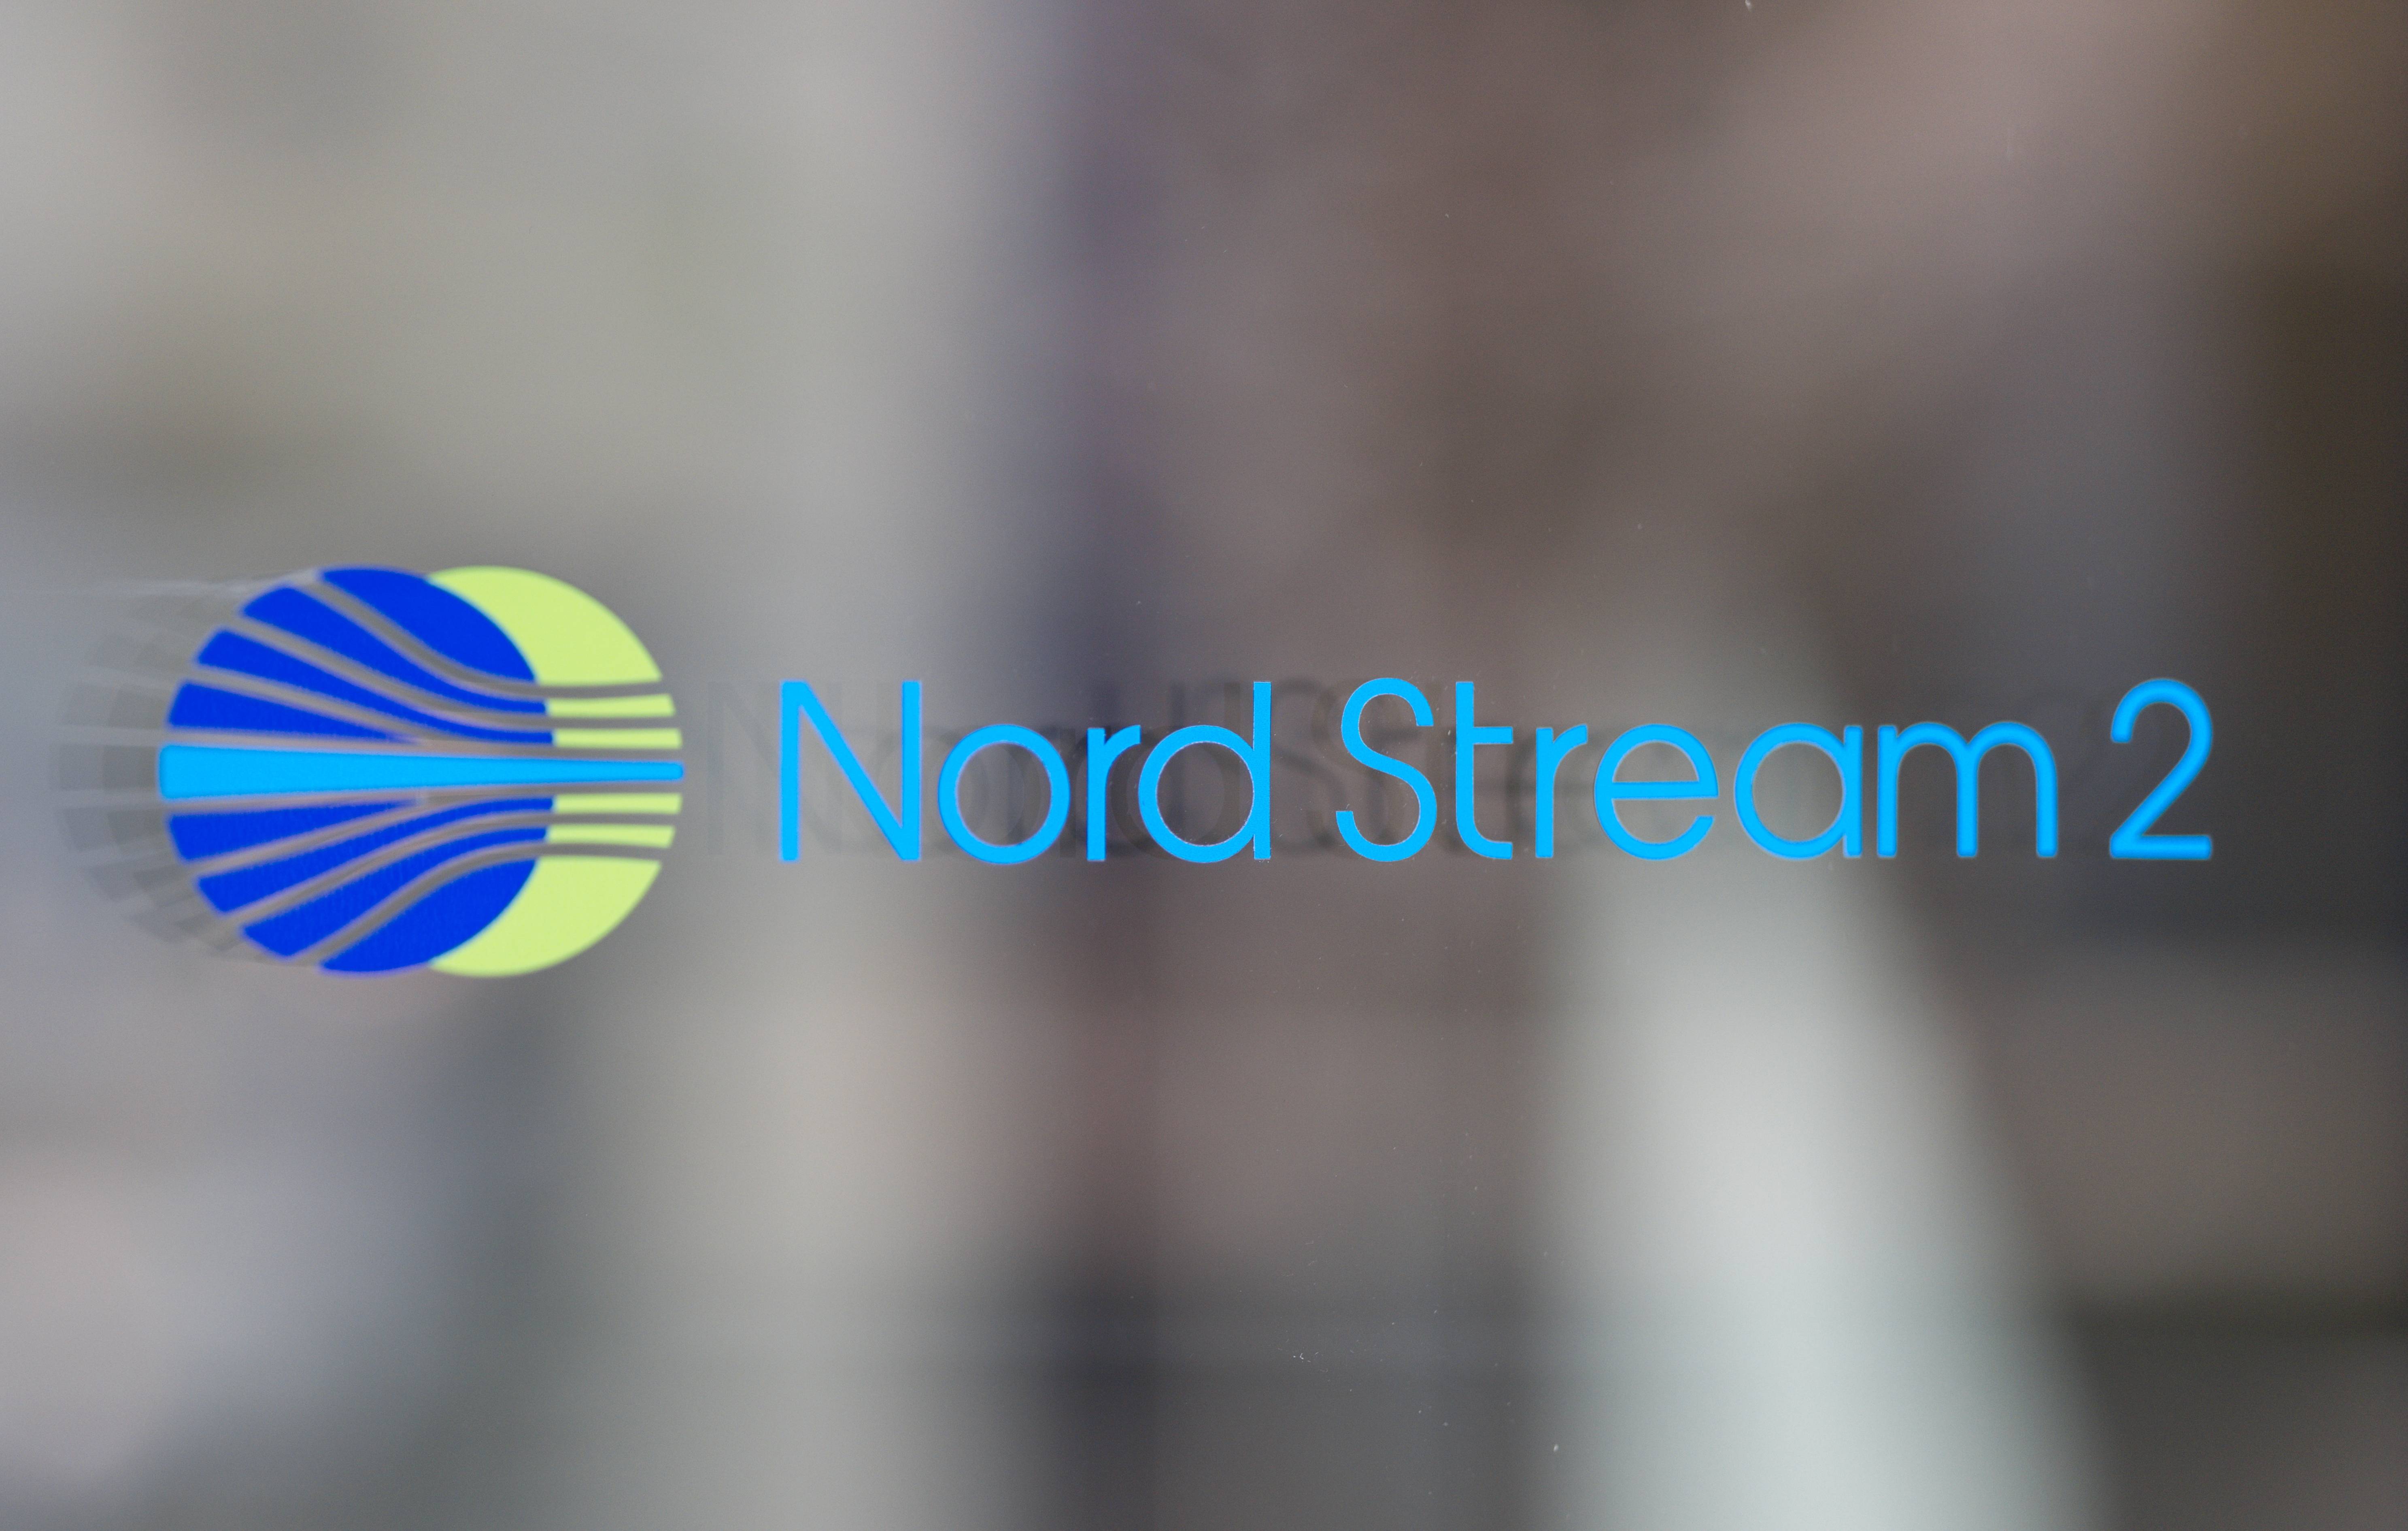 Nord Stream 2 AG 1 марта запросила приостановку арбитража с ЕС о газовой директиве